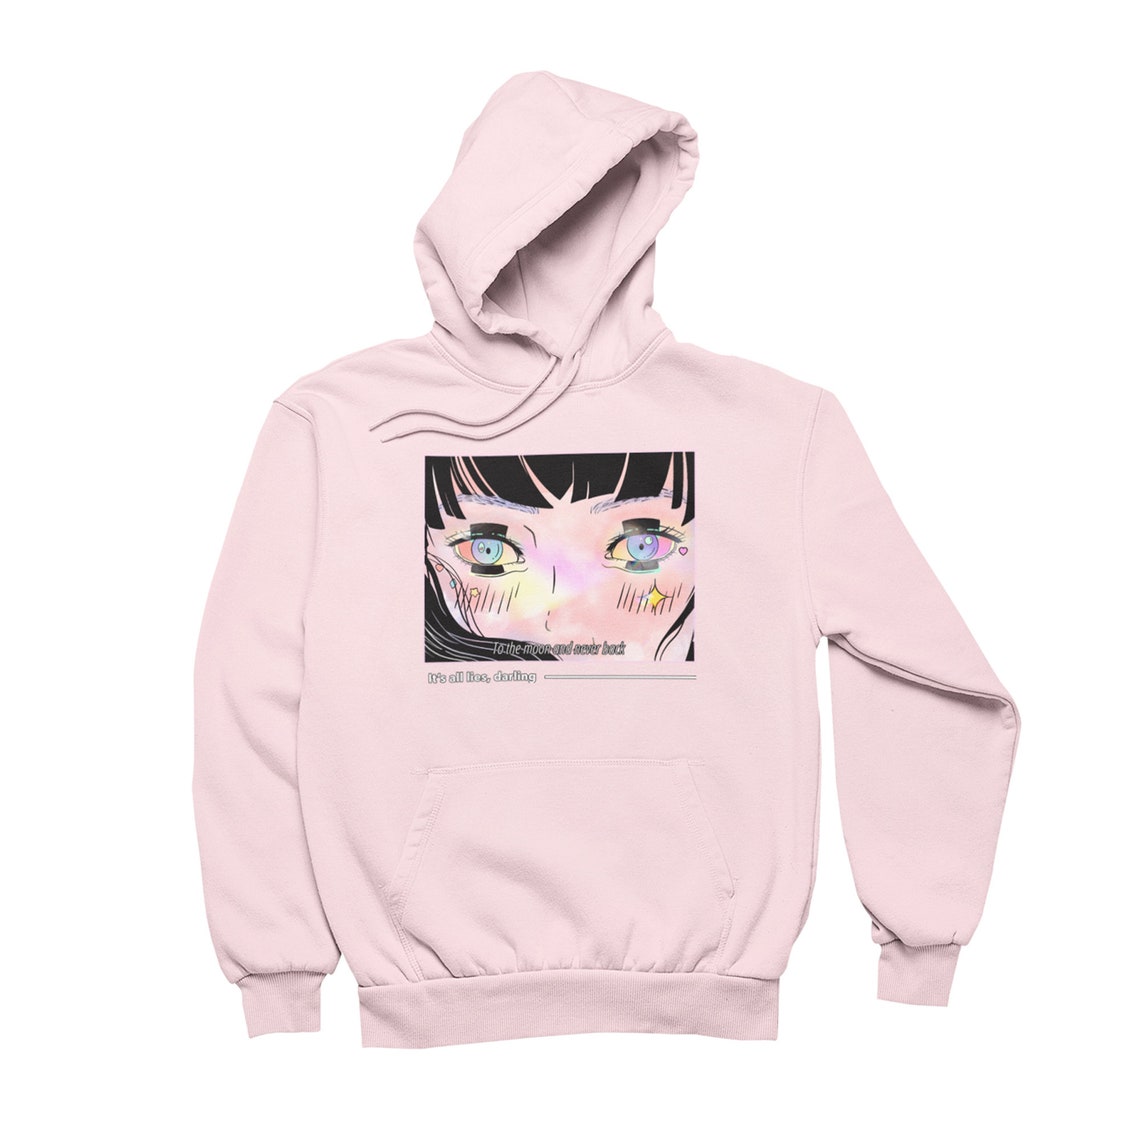 Aesthetic Anime Girl Hoodie Kawaii Clothing Anime | Etsy